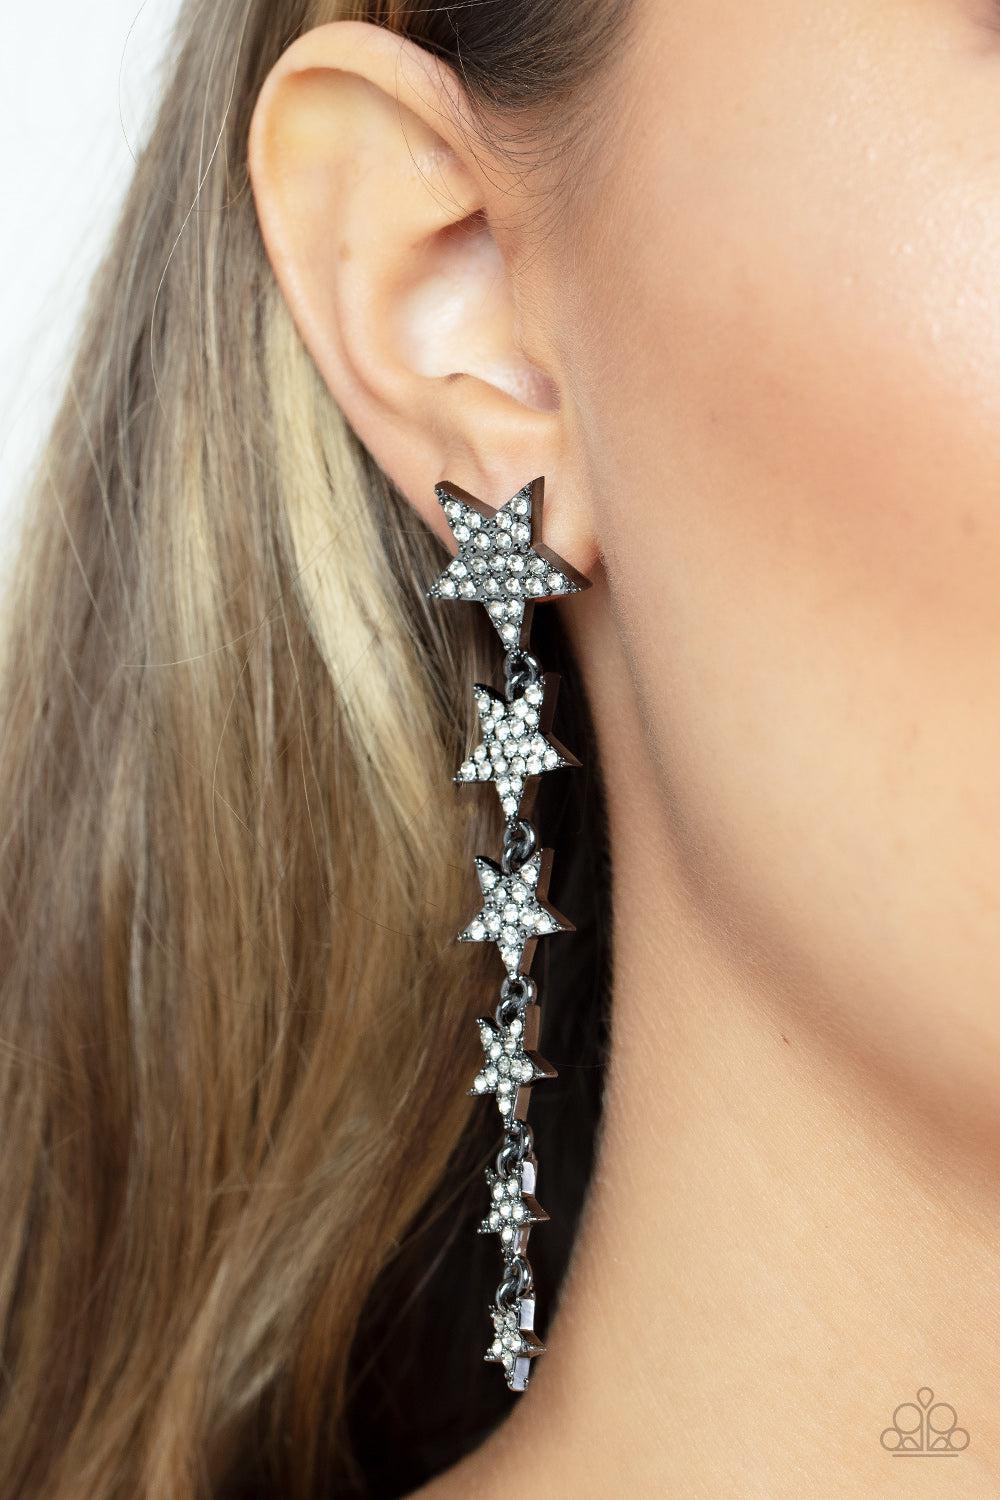 Americana Attitude Black &amp; White Rhinestone Star Earrings - Paparazzi Accessories-on model - CarasShop.com - $5 Jewelry by Cara Jewels